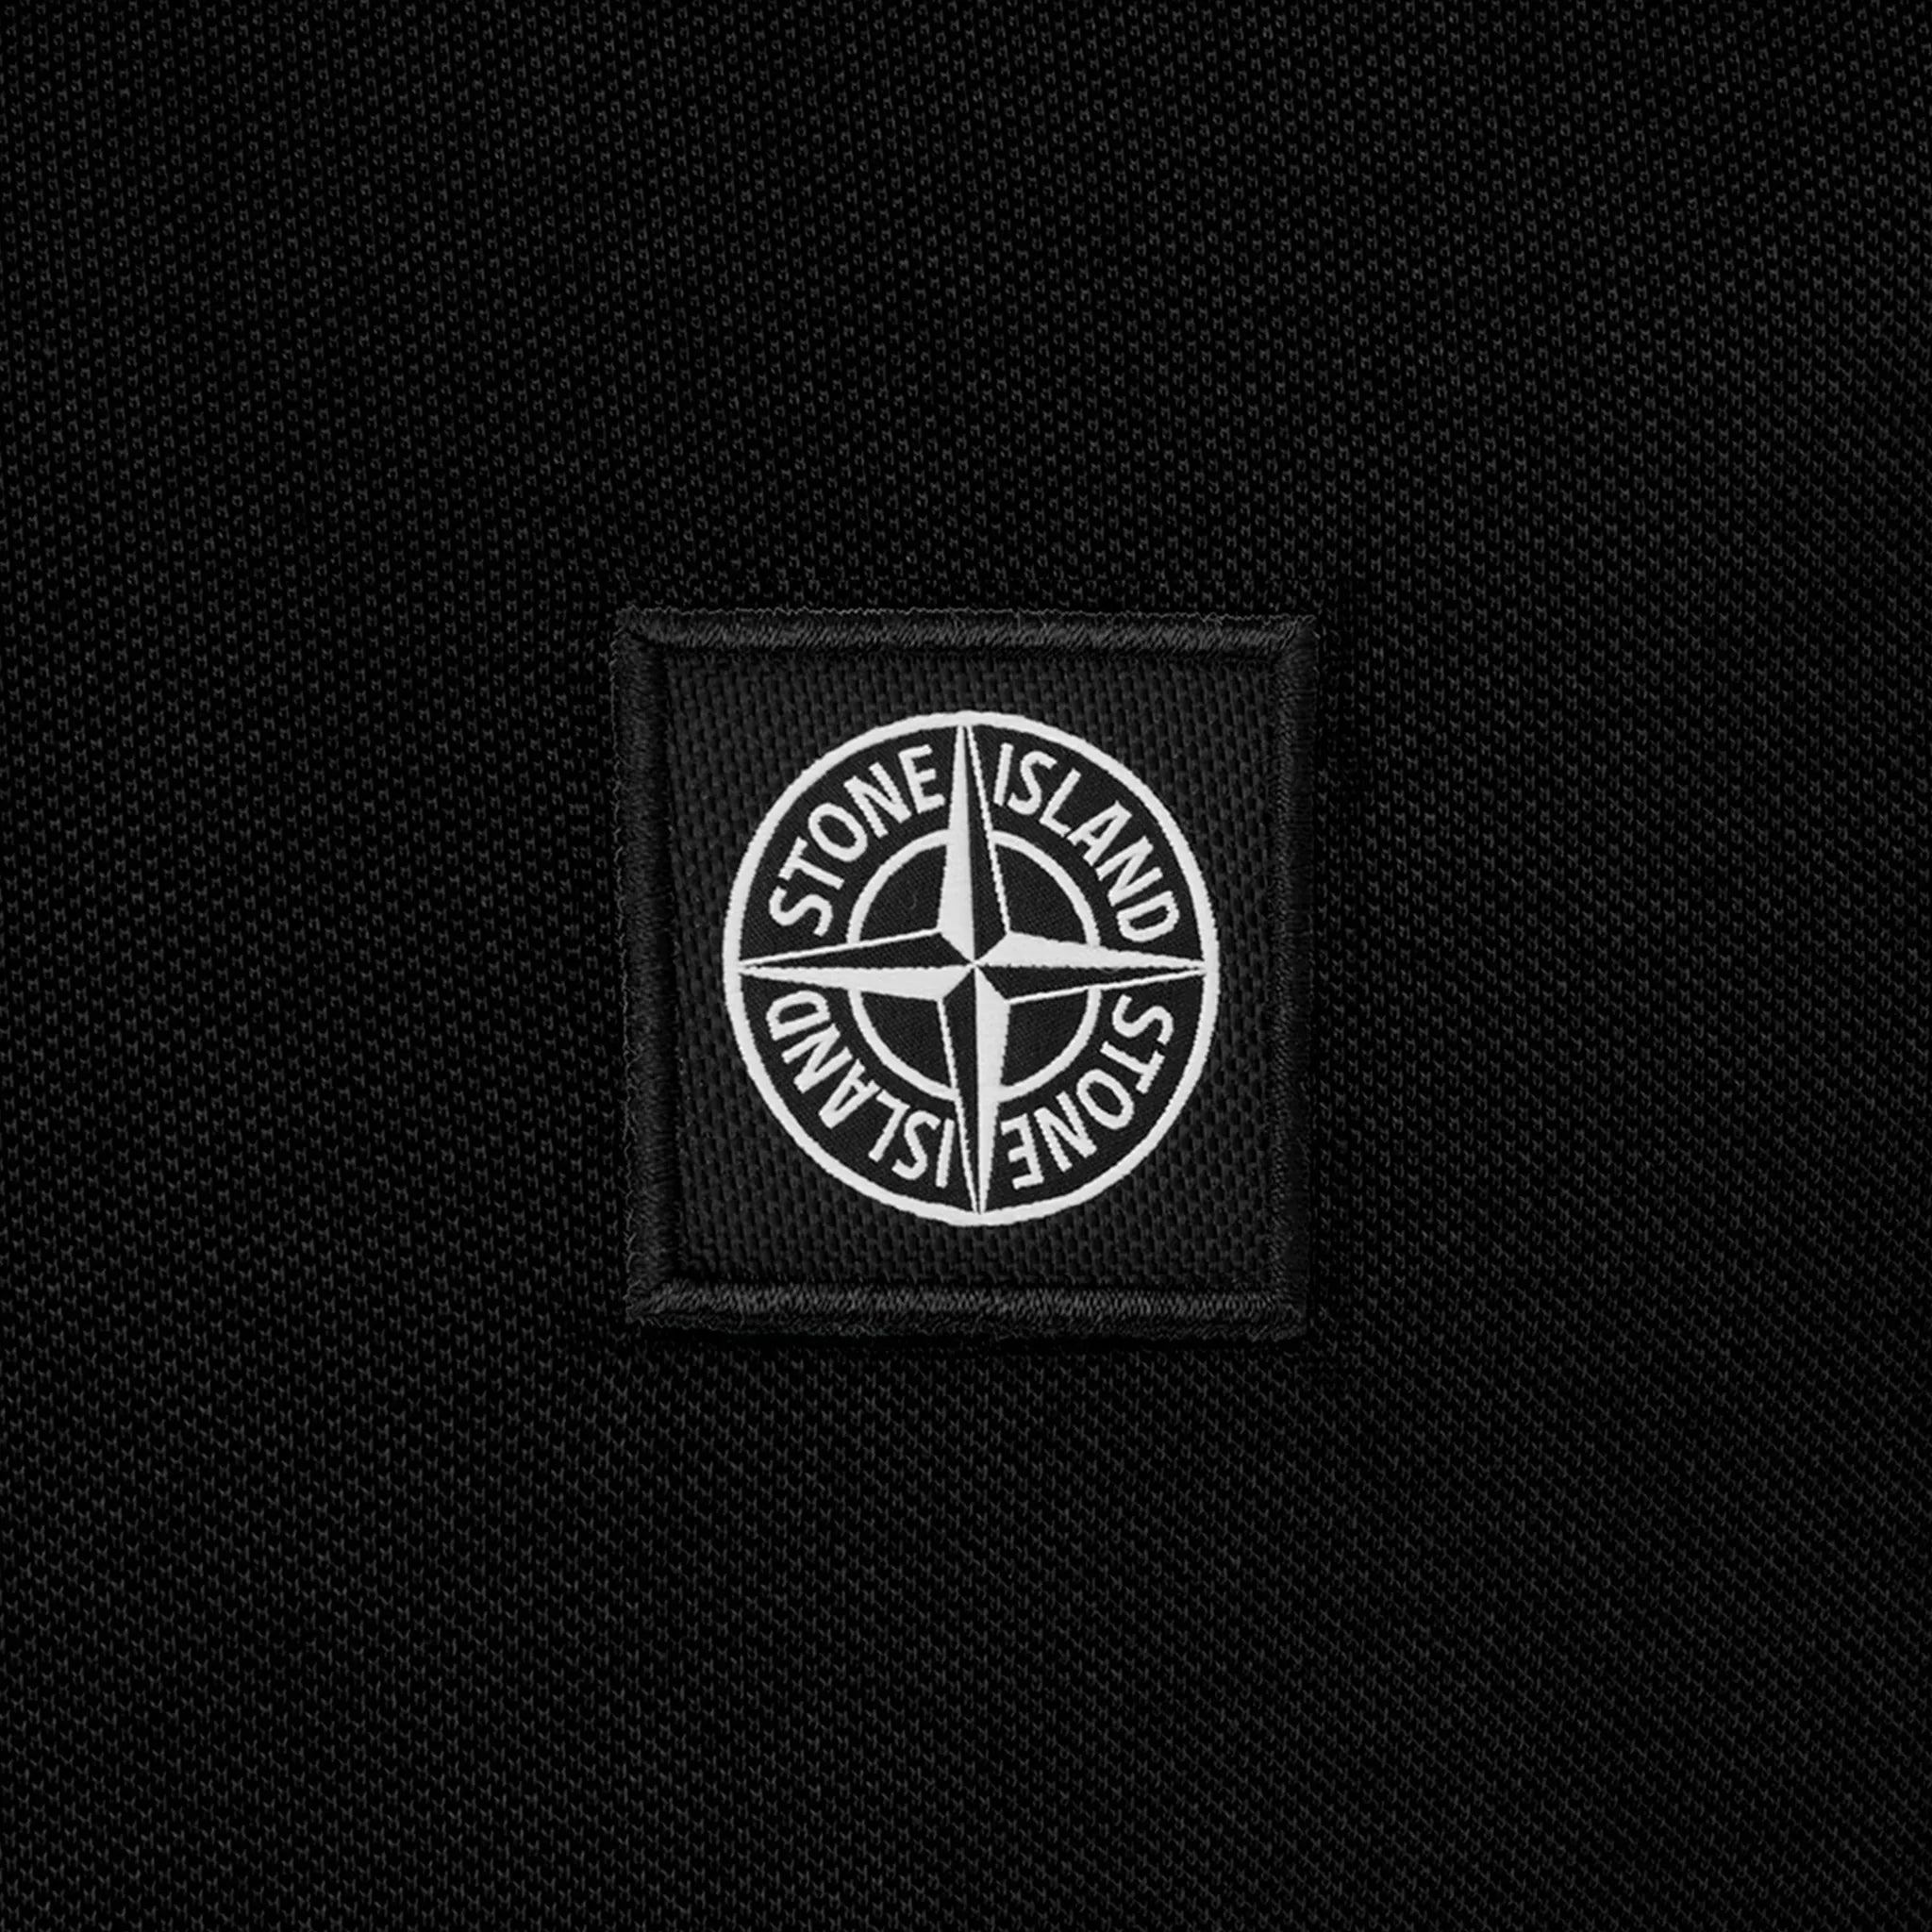 Detail view of Stone Island Tipped Badge Logo Black Polo Shirt 10152sc18-a0029